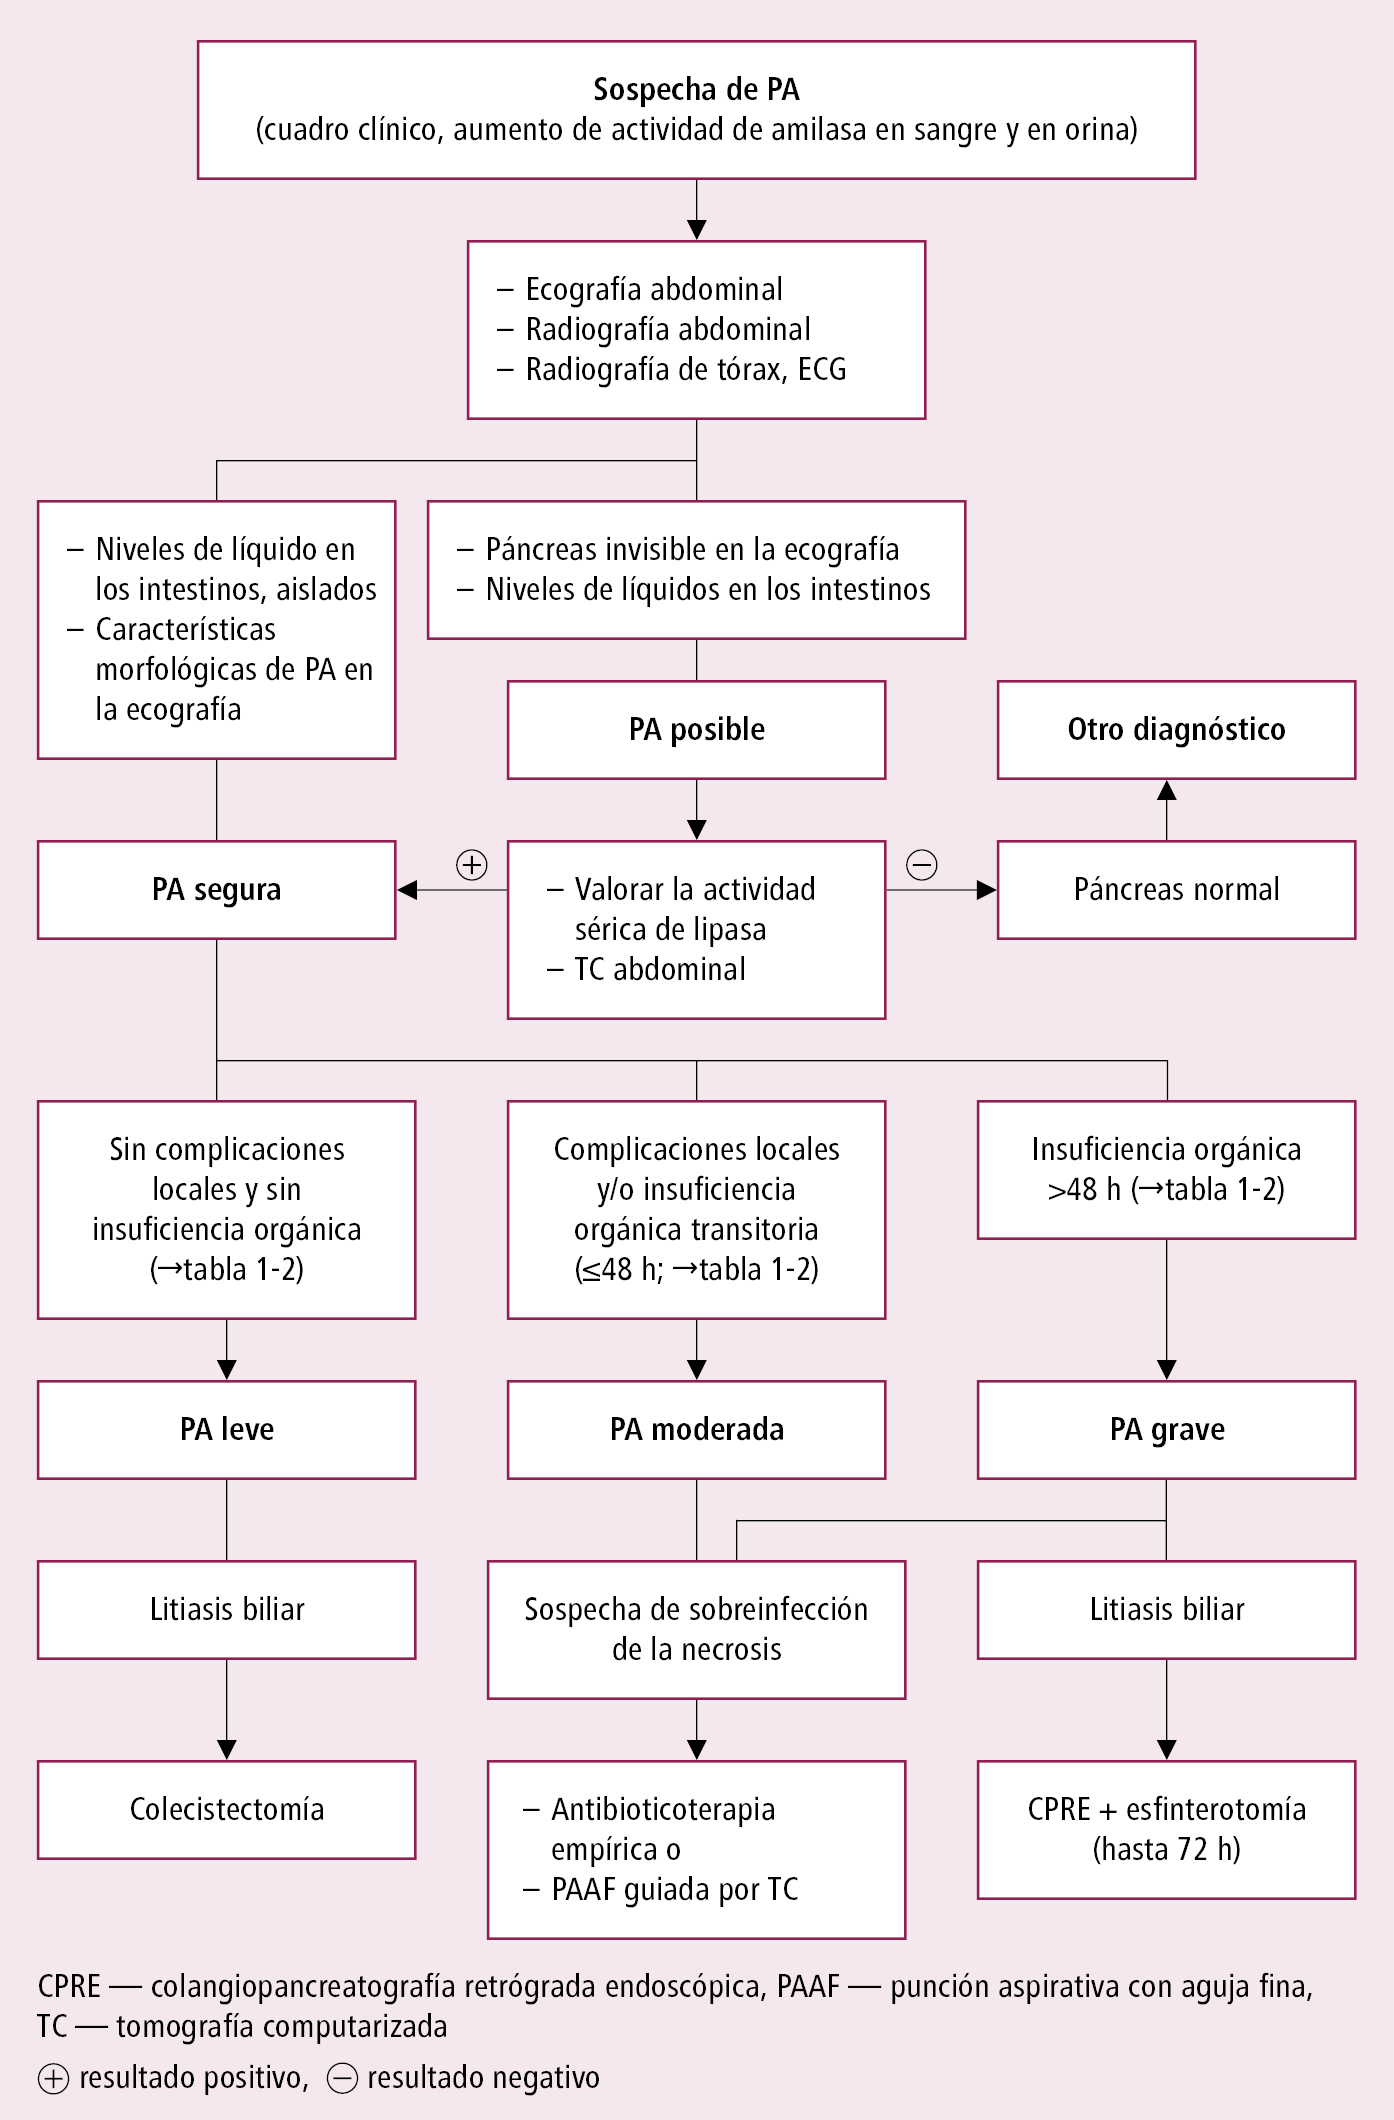    Fig. 5.1-1.  Algoritmo diagnóstico de la pancreatitis aguda (PA)  